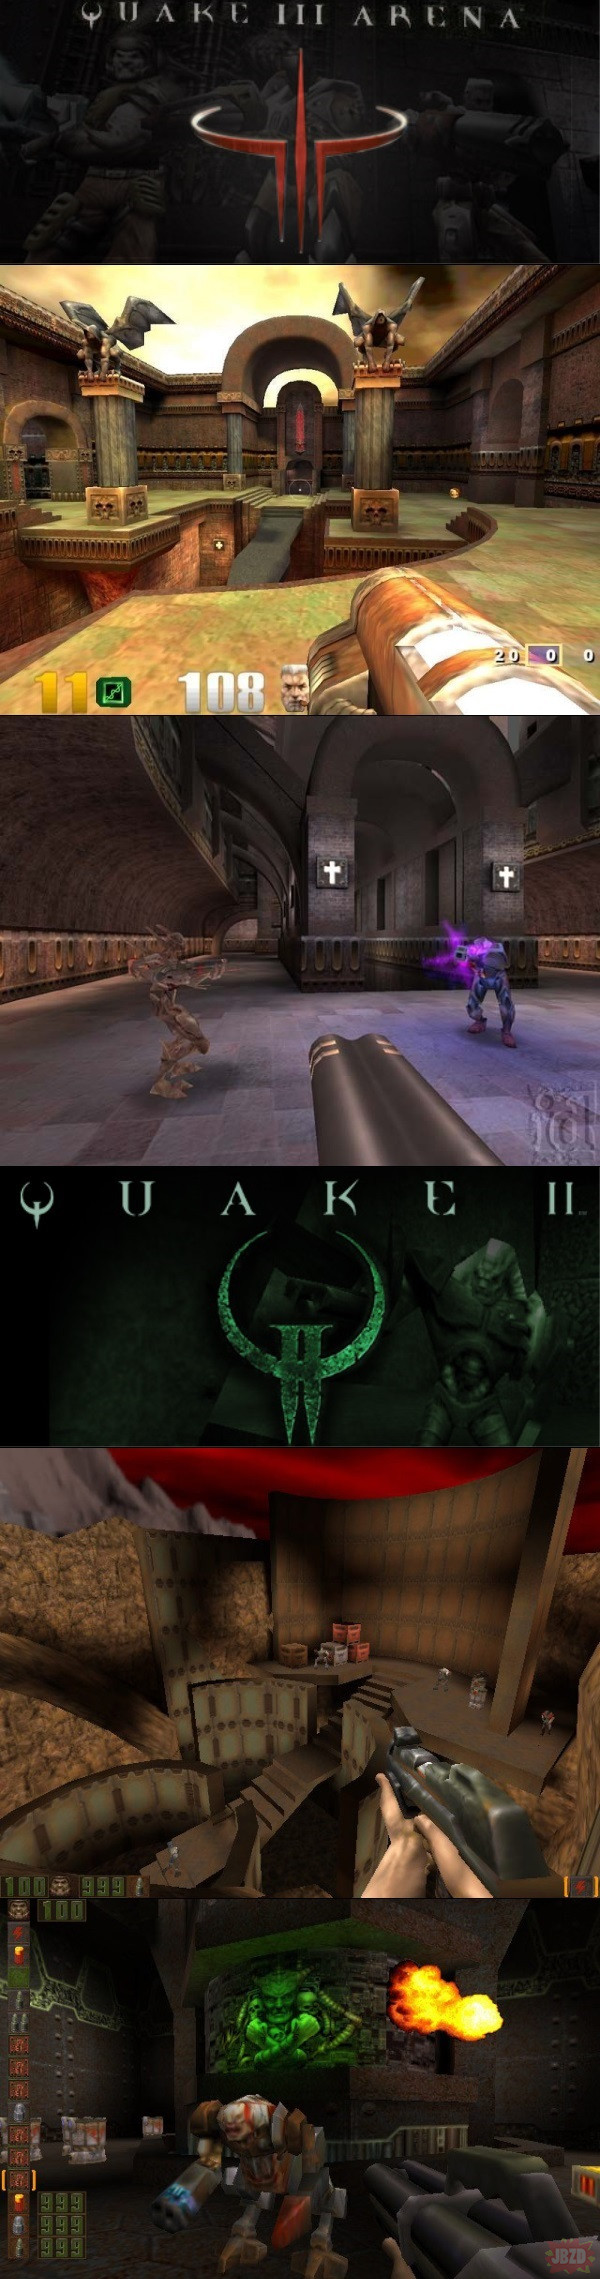 Quake III i Quake II za darmo na Bethesda.net Launcher